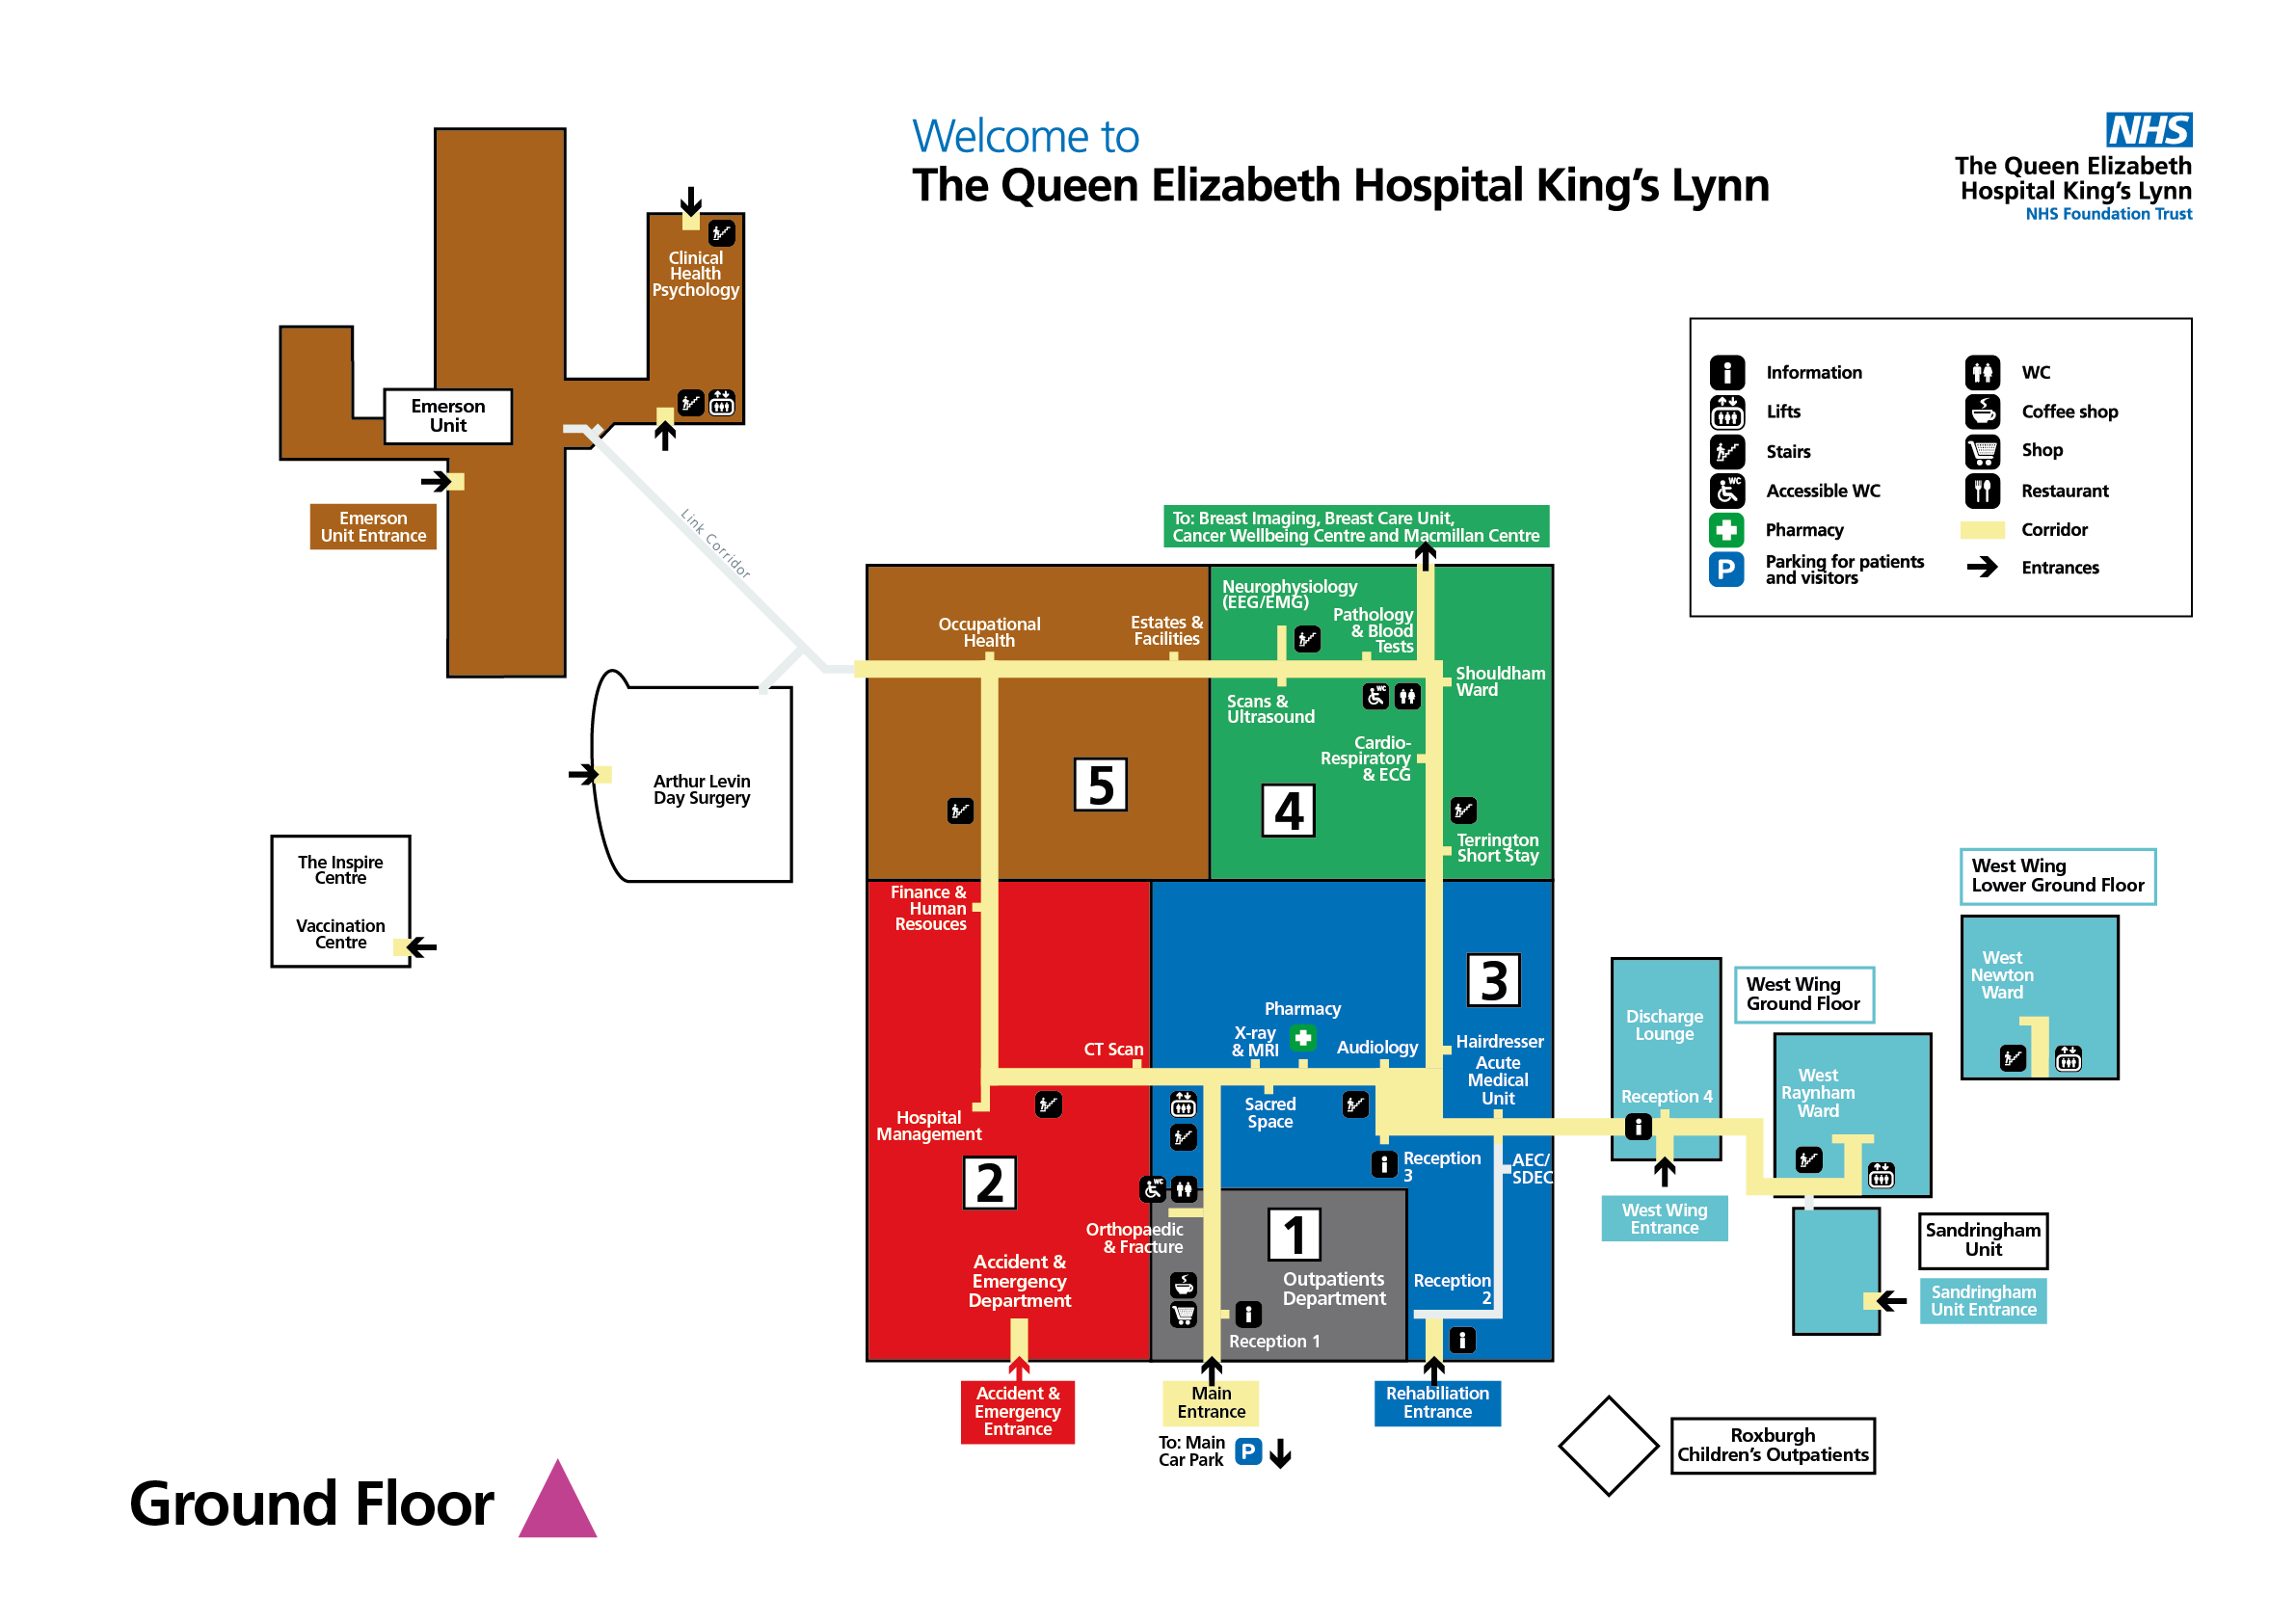 Image of hospital ground floor map